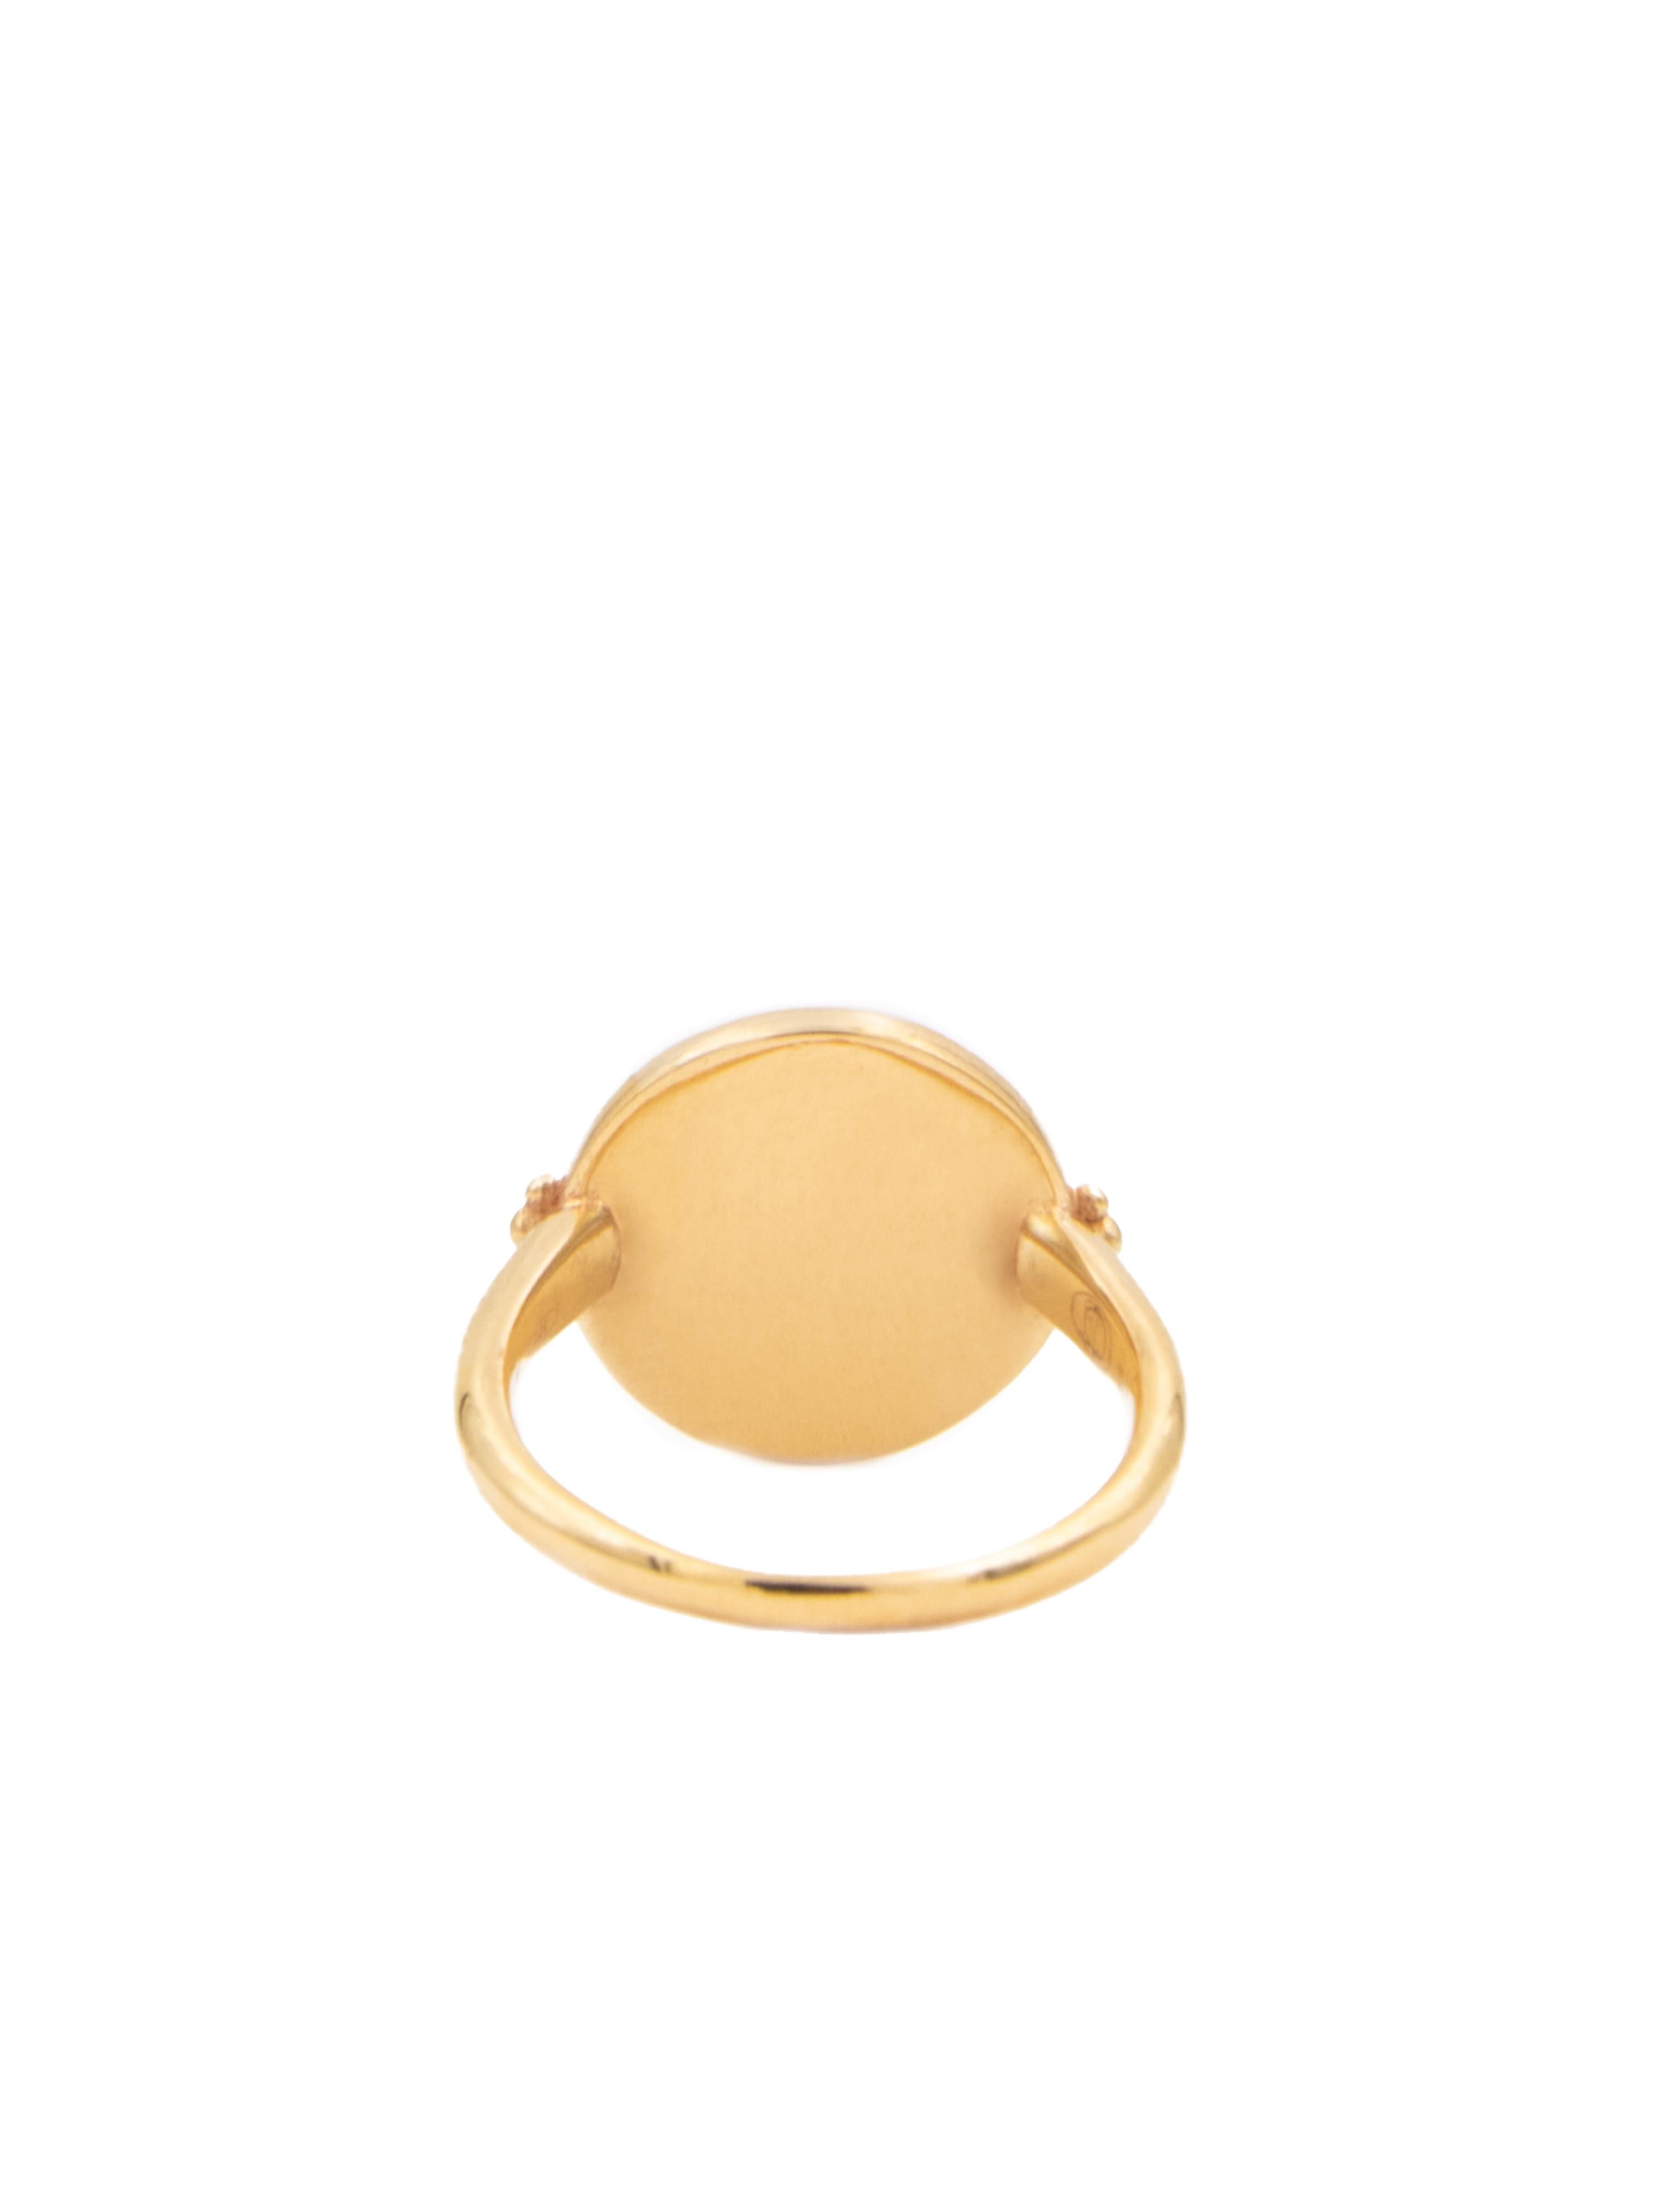 Contemporary Julia-Didon Cayre 18 Karat Yellow Gold Diamond and Sapphire Ring